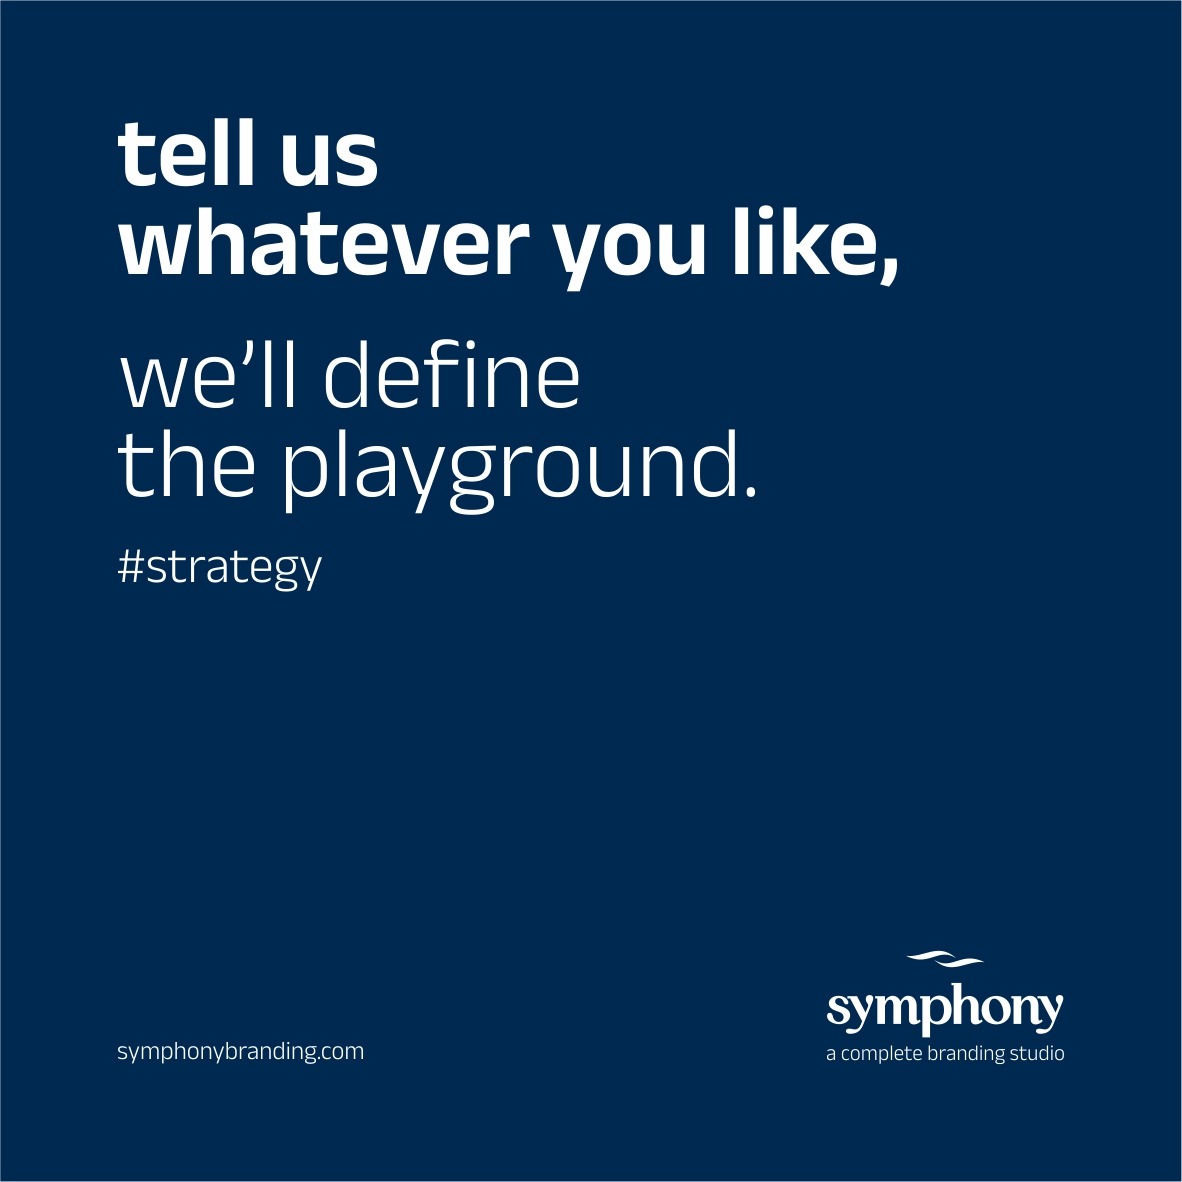 tell us whatever you like, we'll define the playground...🔝🔝
.
.
.
#symphonybranding #strategy #branding #websolutions #advertisingsolutions #brandingaolutions #digitalsolutions #advertising #designwithpurpose